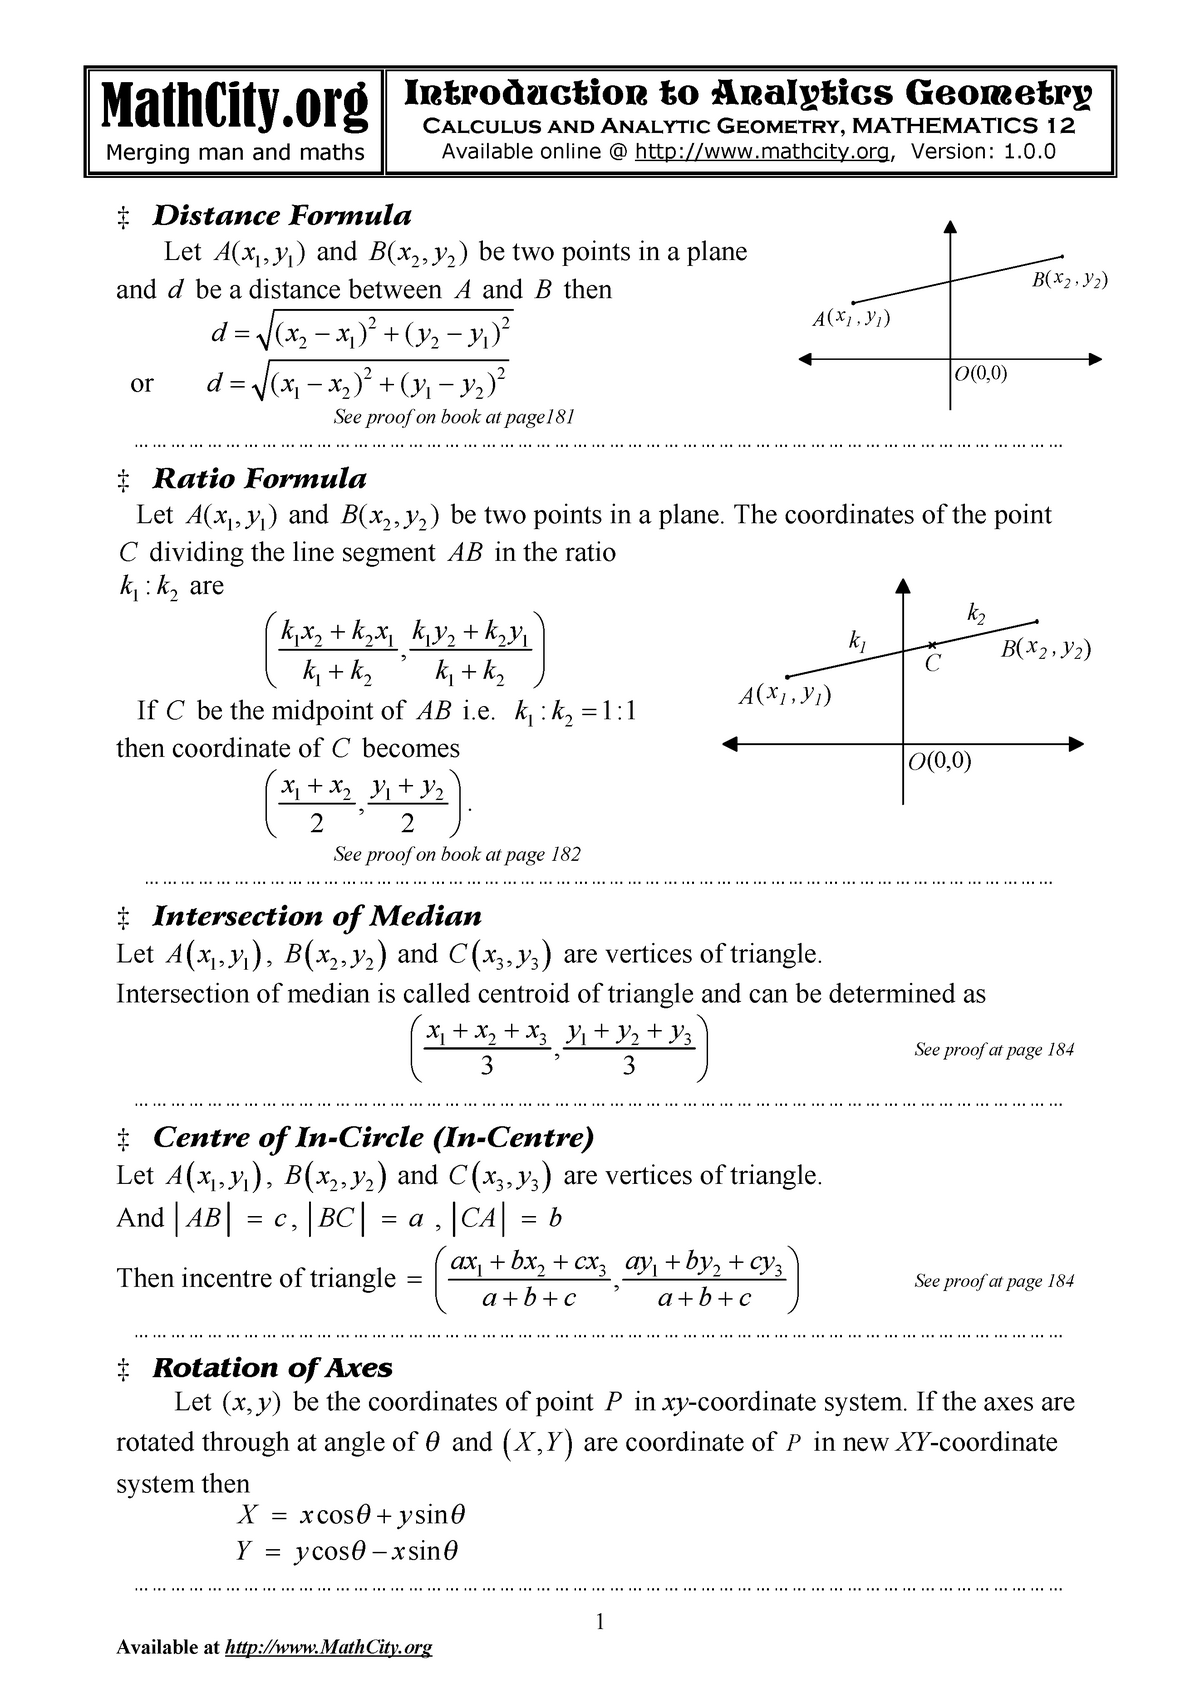 Ch04 Formulas Introduction To Analytics Geometry Mathcity Org Introduction To Analytics Geometry Calculus And Analytic Geometry Mathematics 12 Merging Man And Studocu